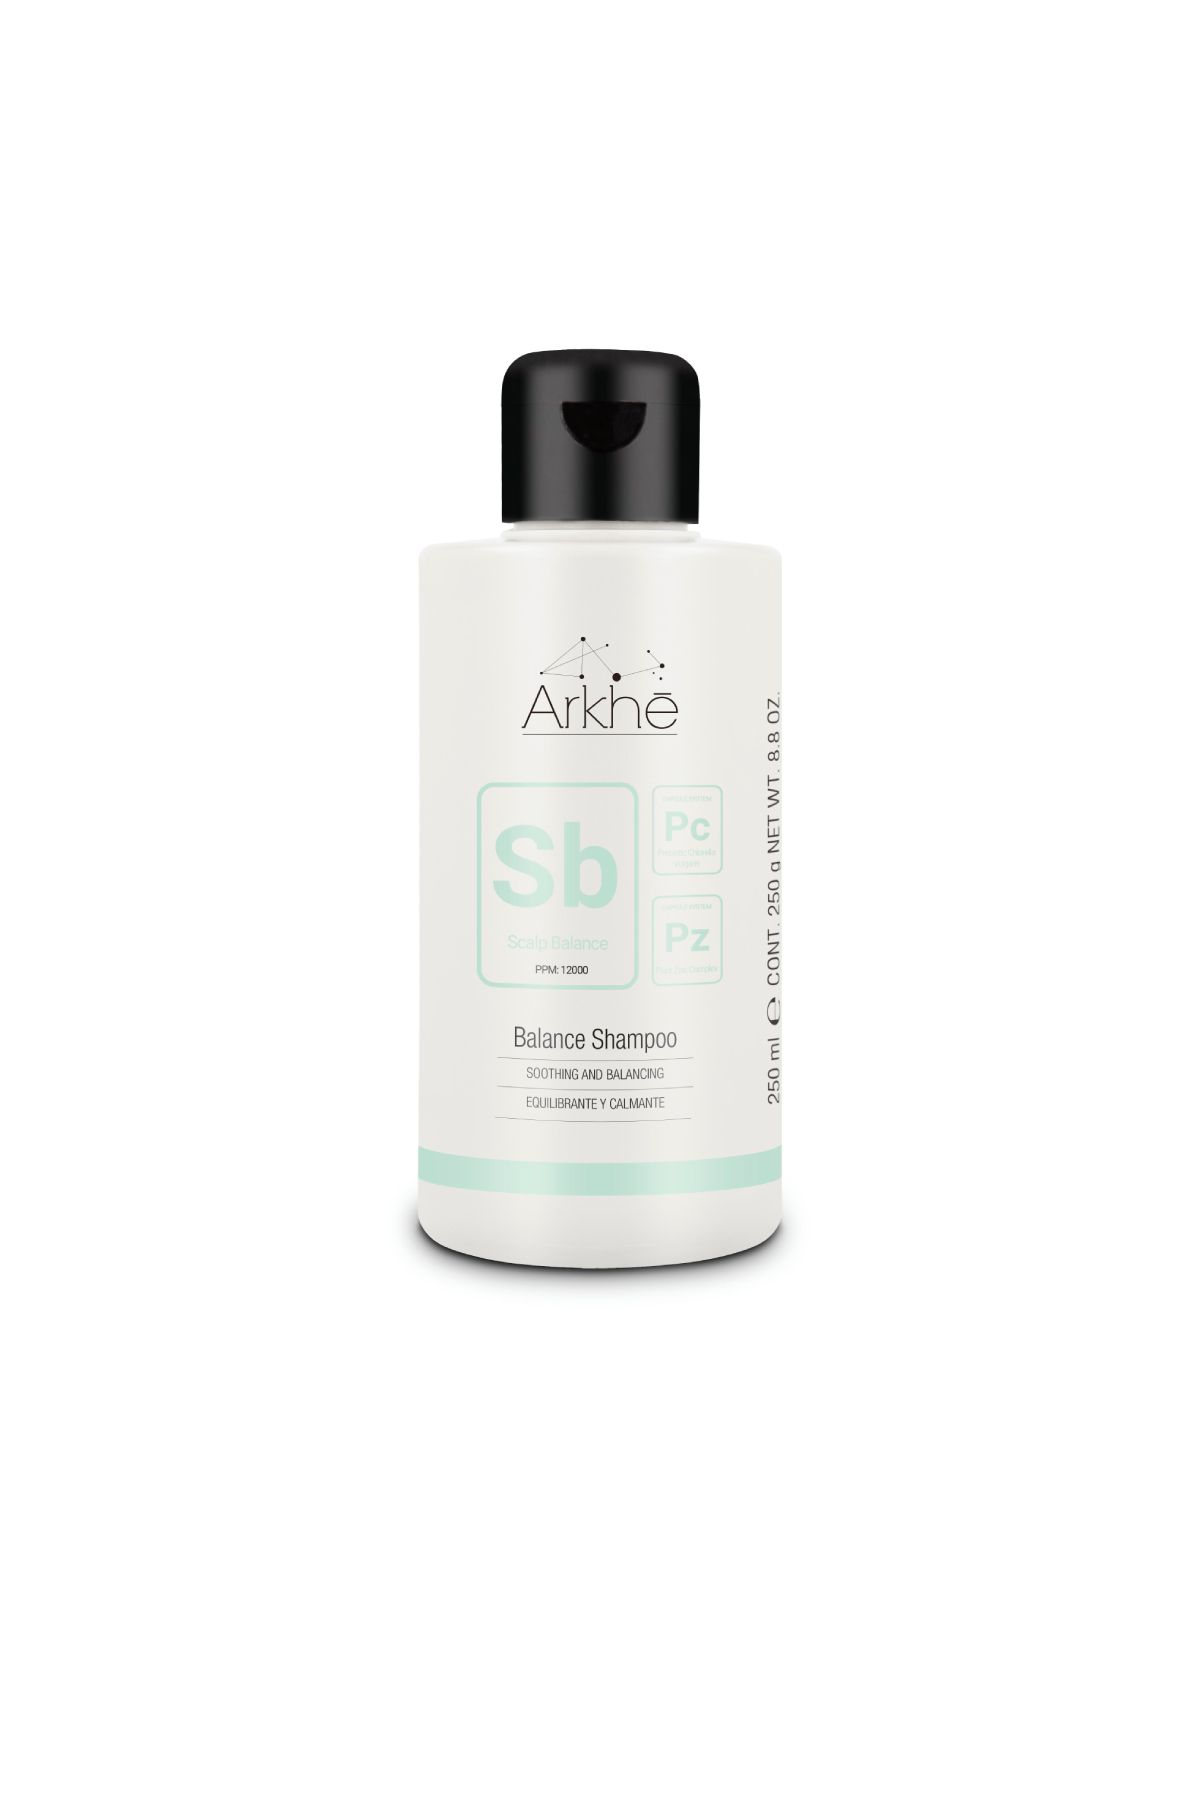 Balance Shampoo de Arkhé Cosmetics